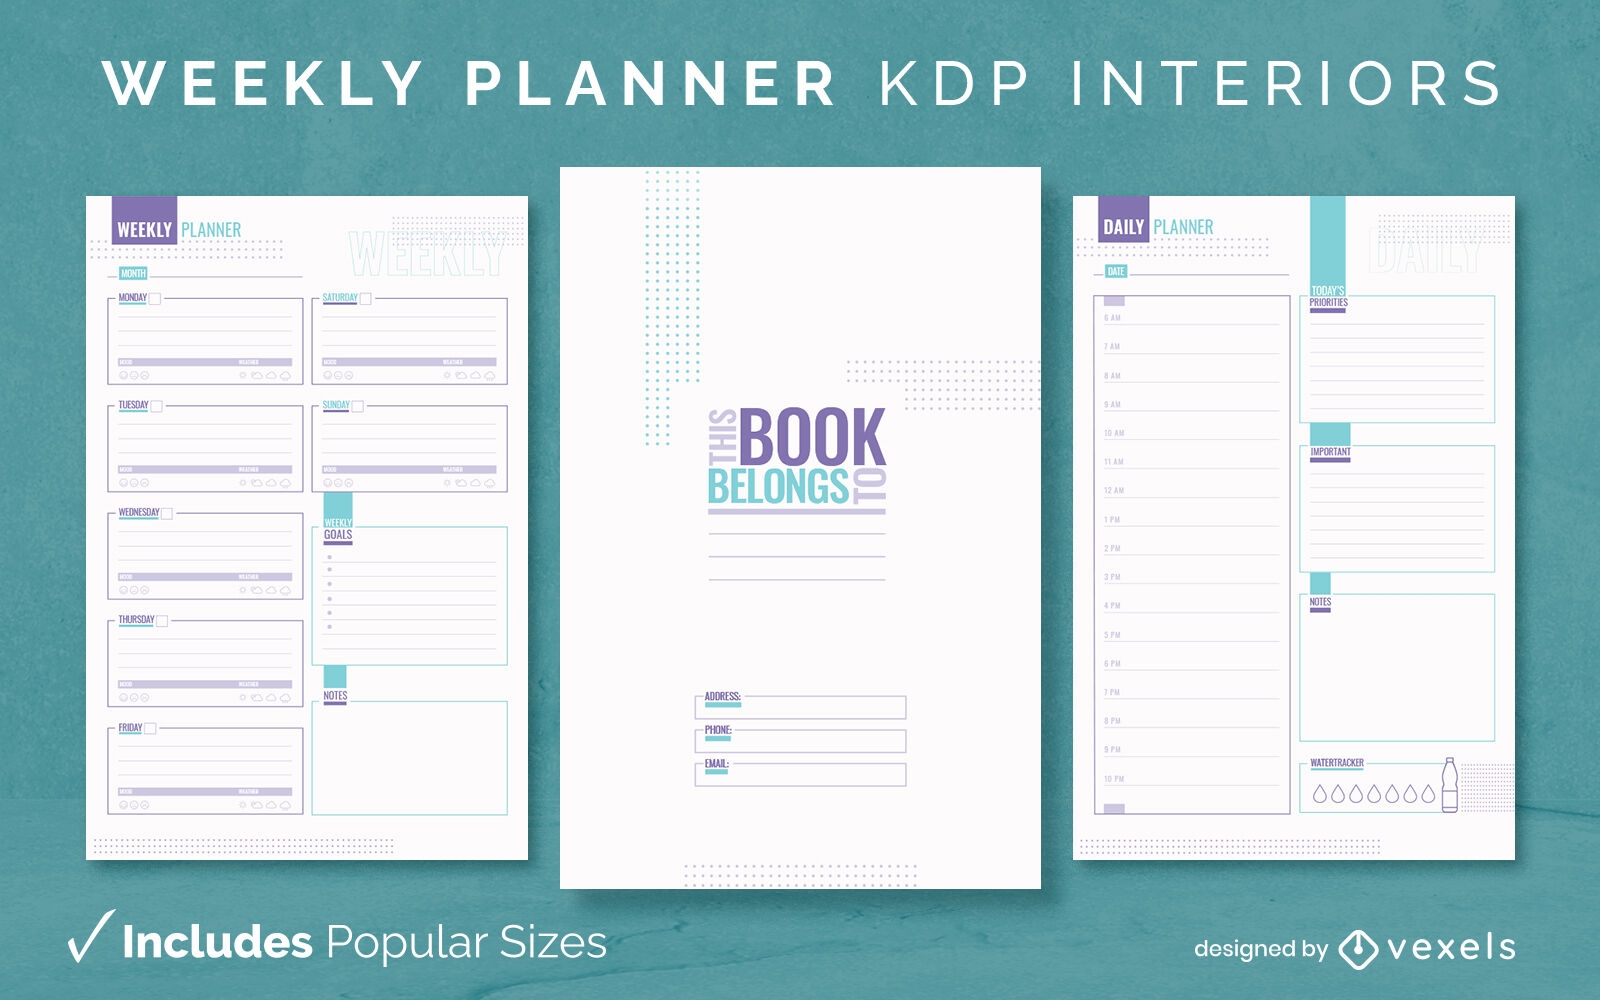 Weekly planner journal design template KDP